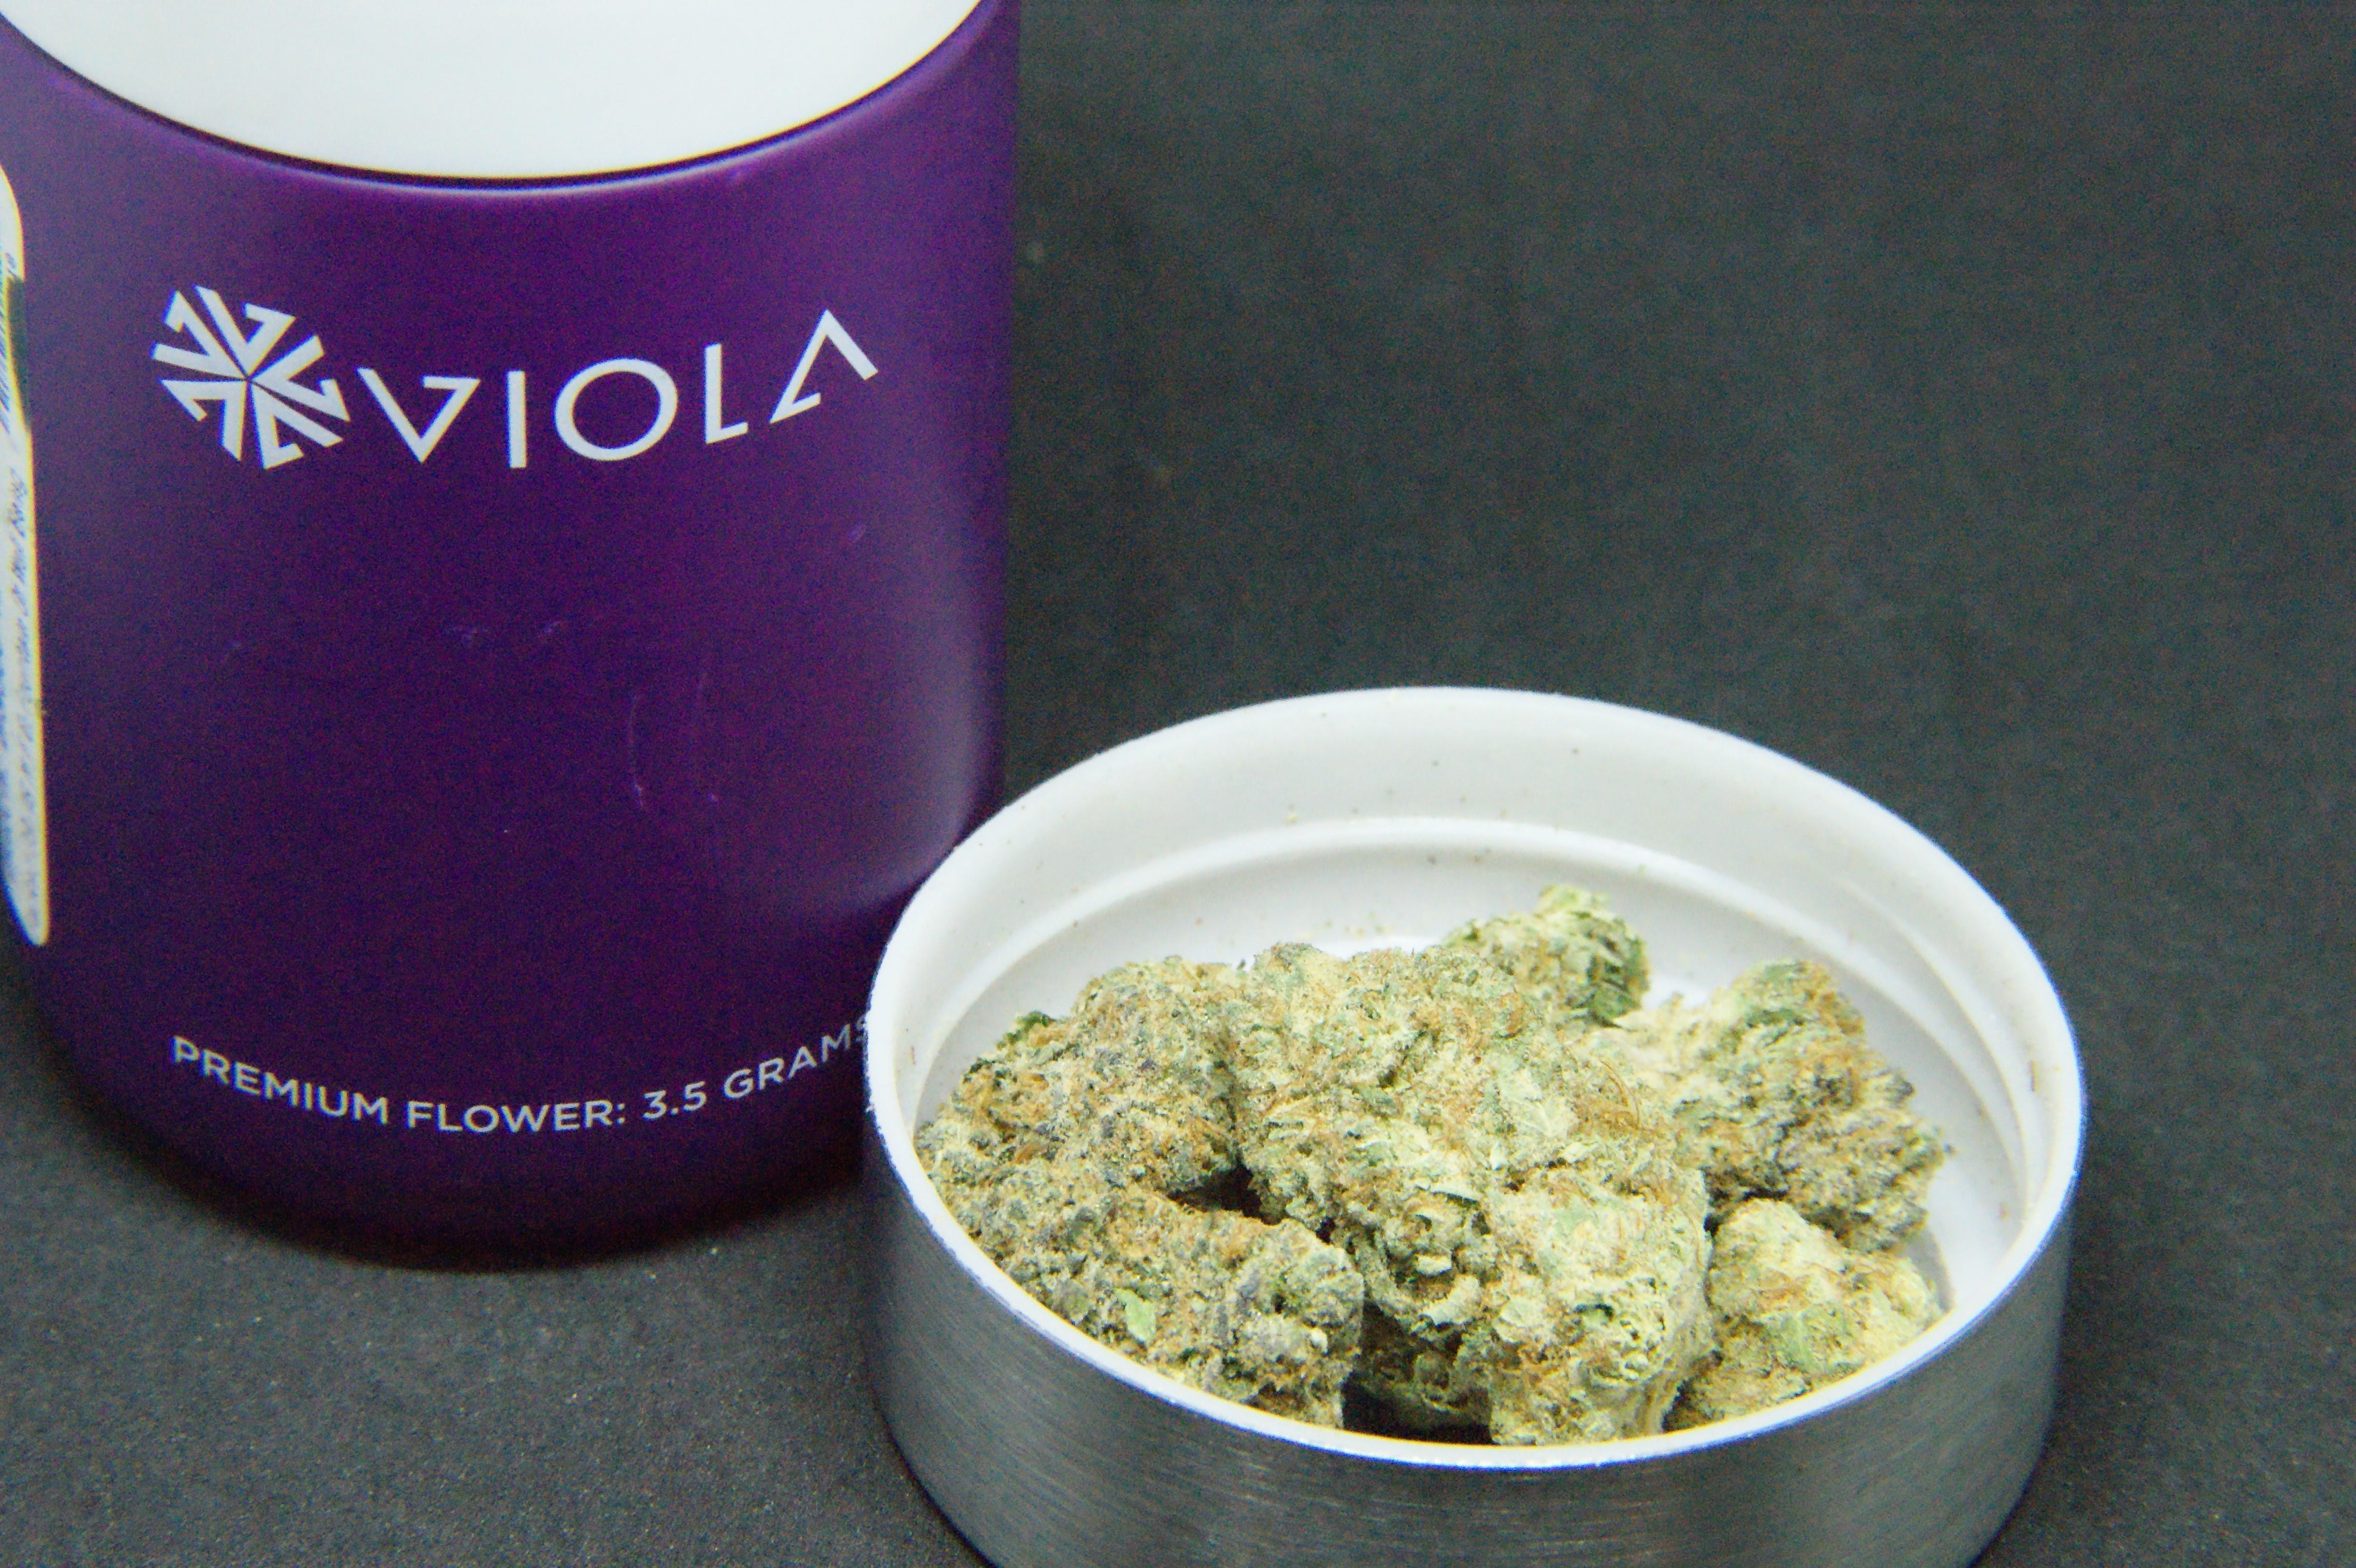 marijuana-dispensaries-strain-balboa-caregivers-adult-use-in-chatsworth-animal-cookies-by-viola